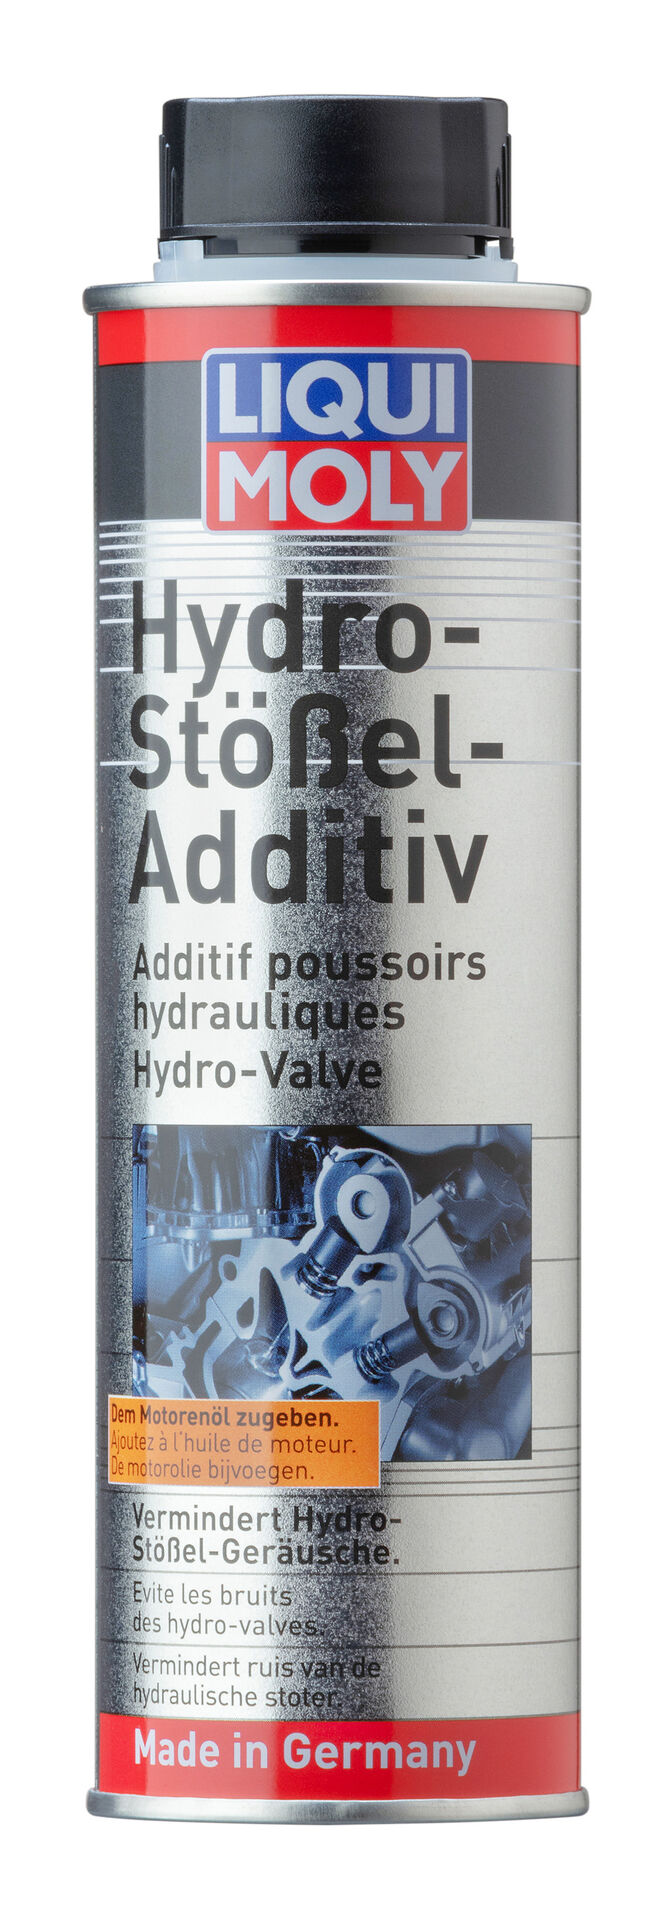  Liqui Moly Hydro-Stößel-Additiv Reiniger 1x 300 ml Dose 1009